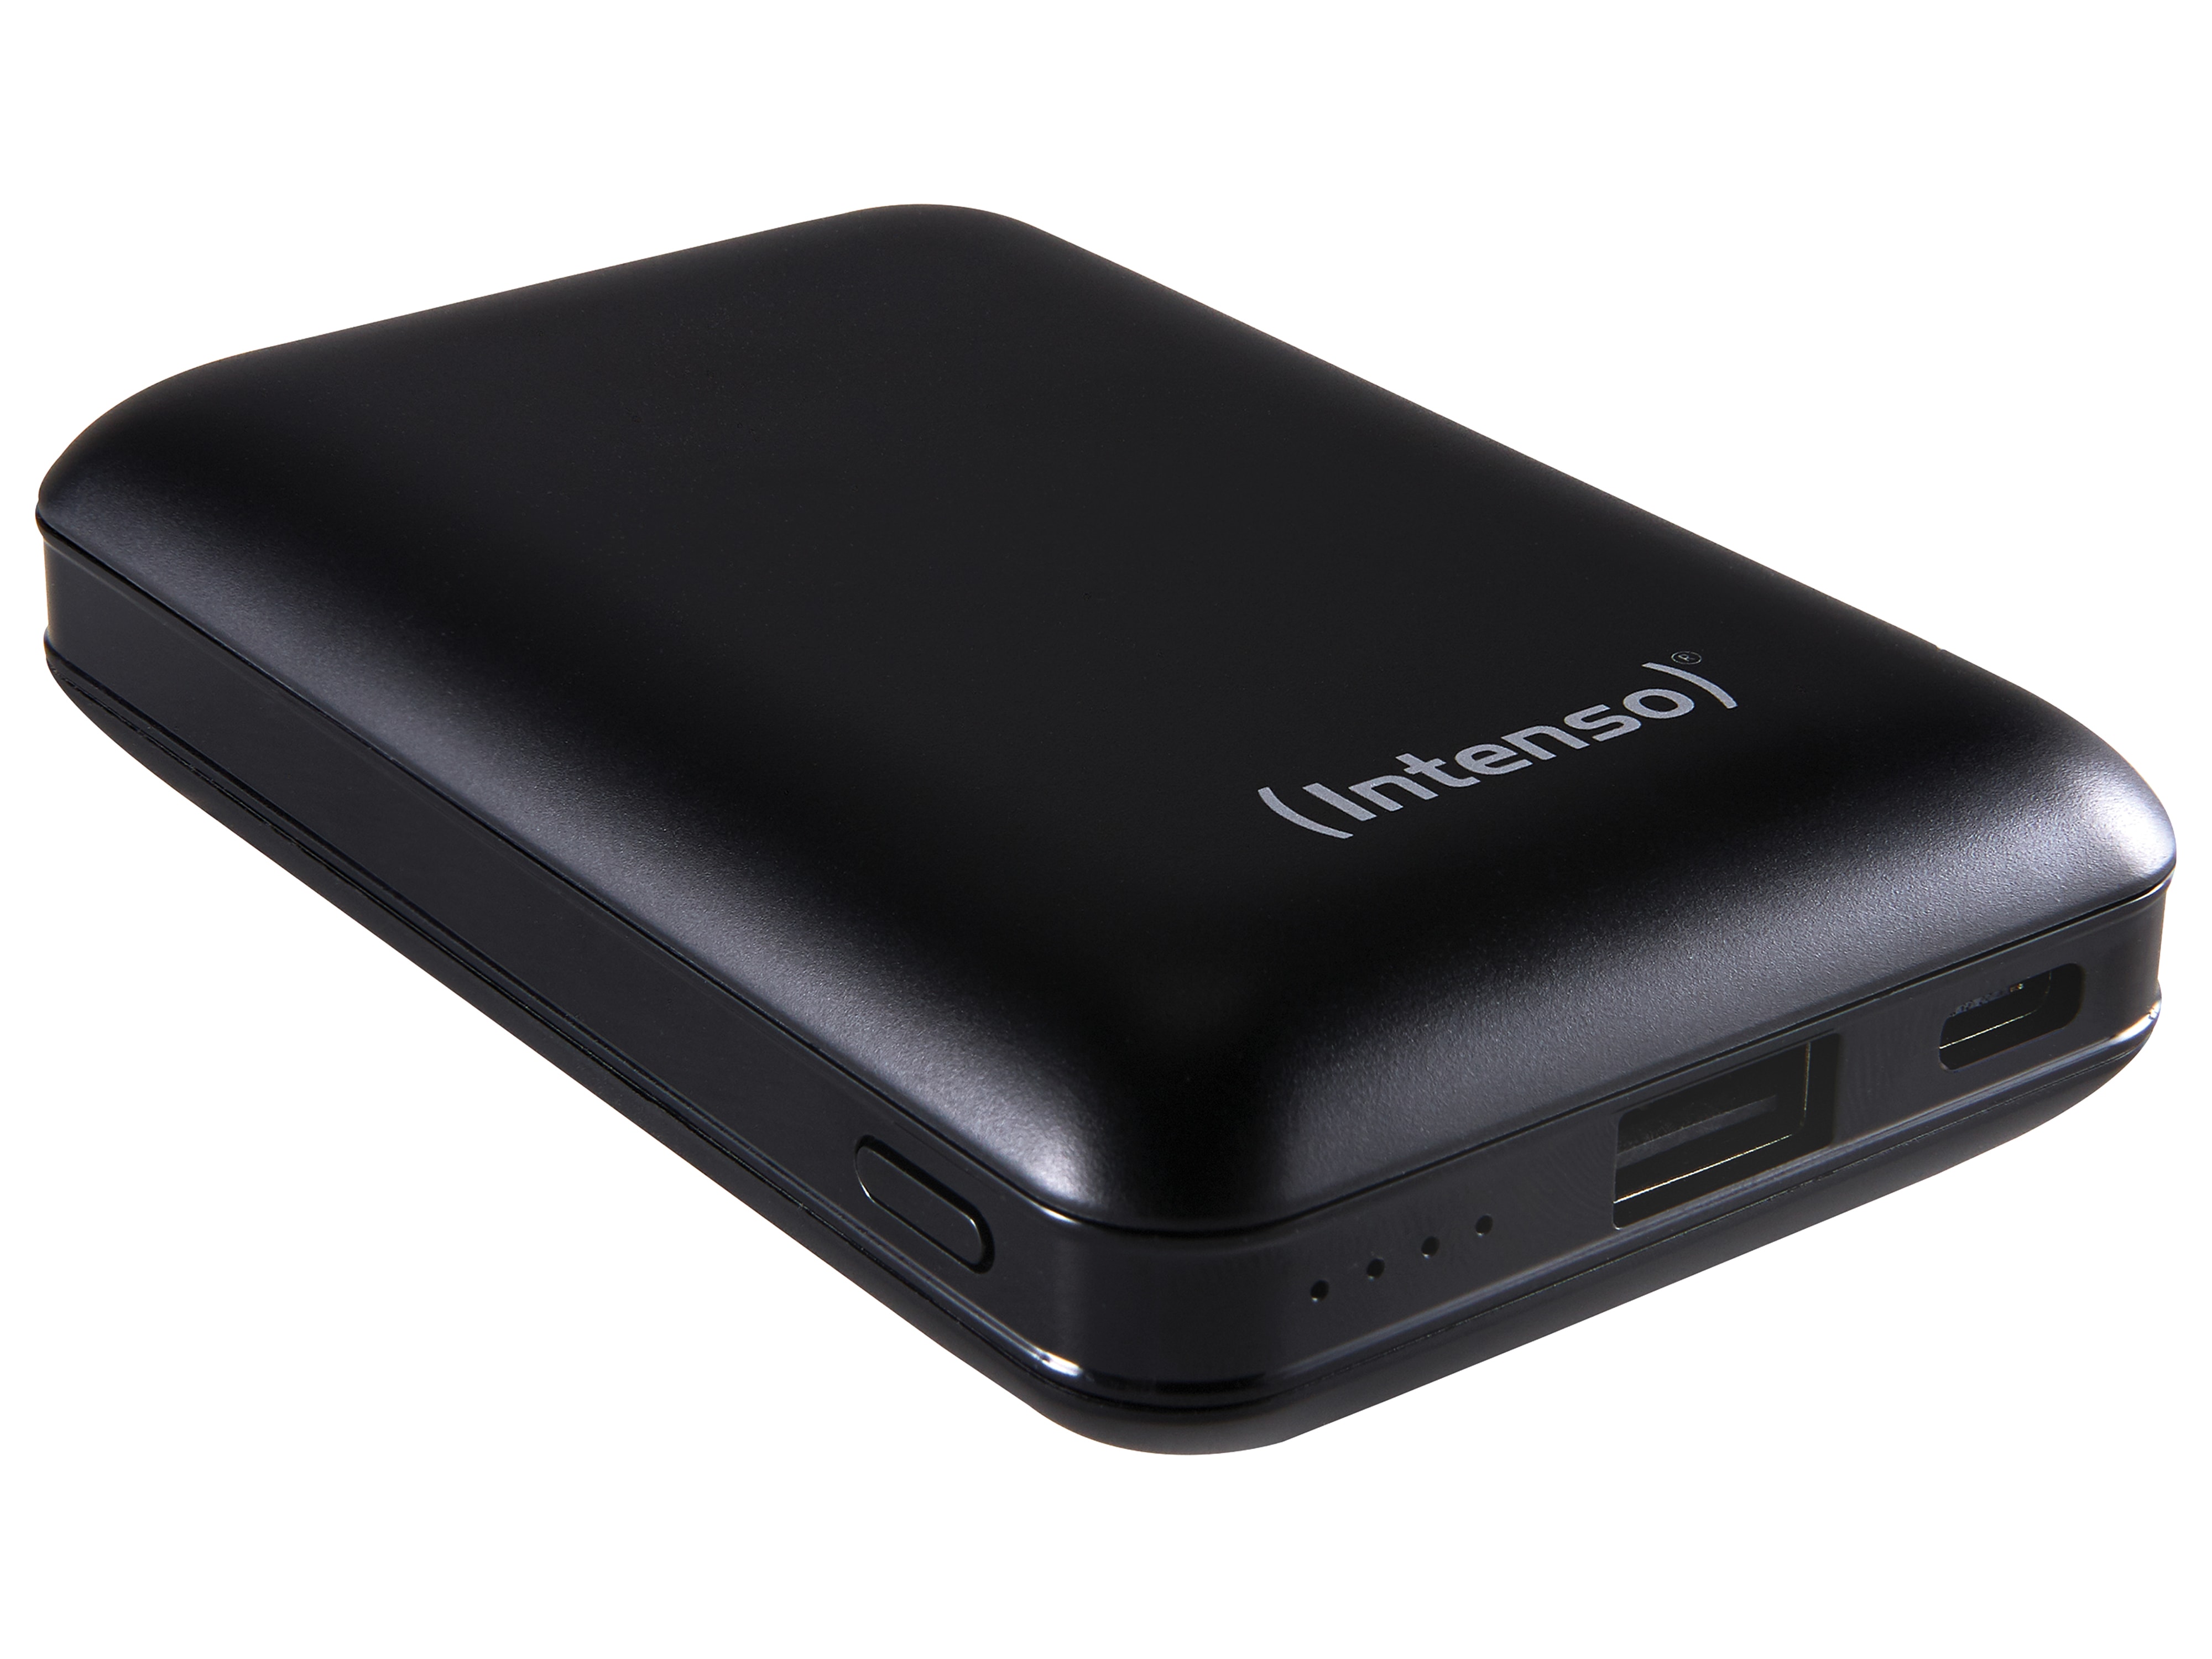 INTENSO USB Powerbank 7314530 XC 10000, 10.000 mAh, schwarz